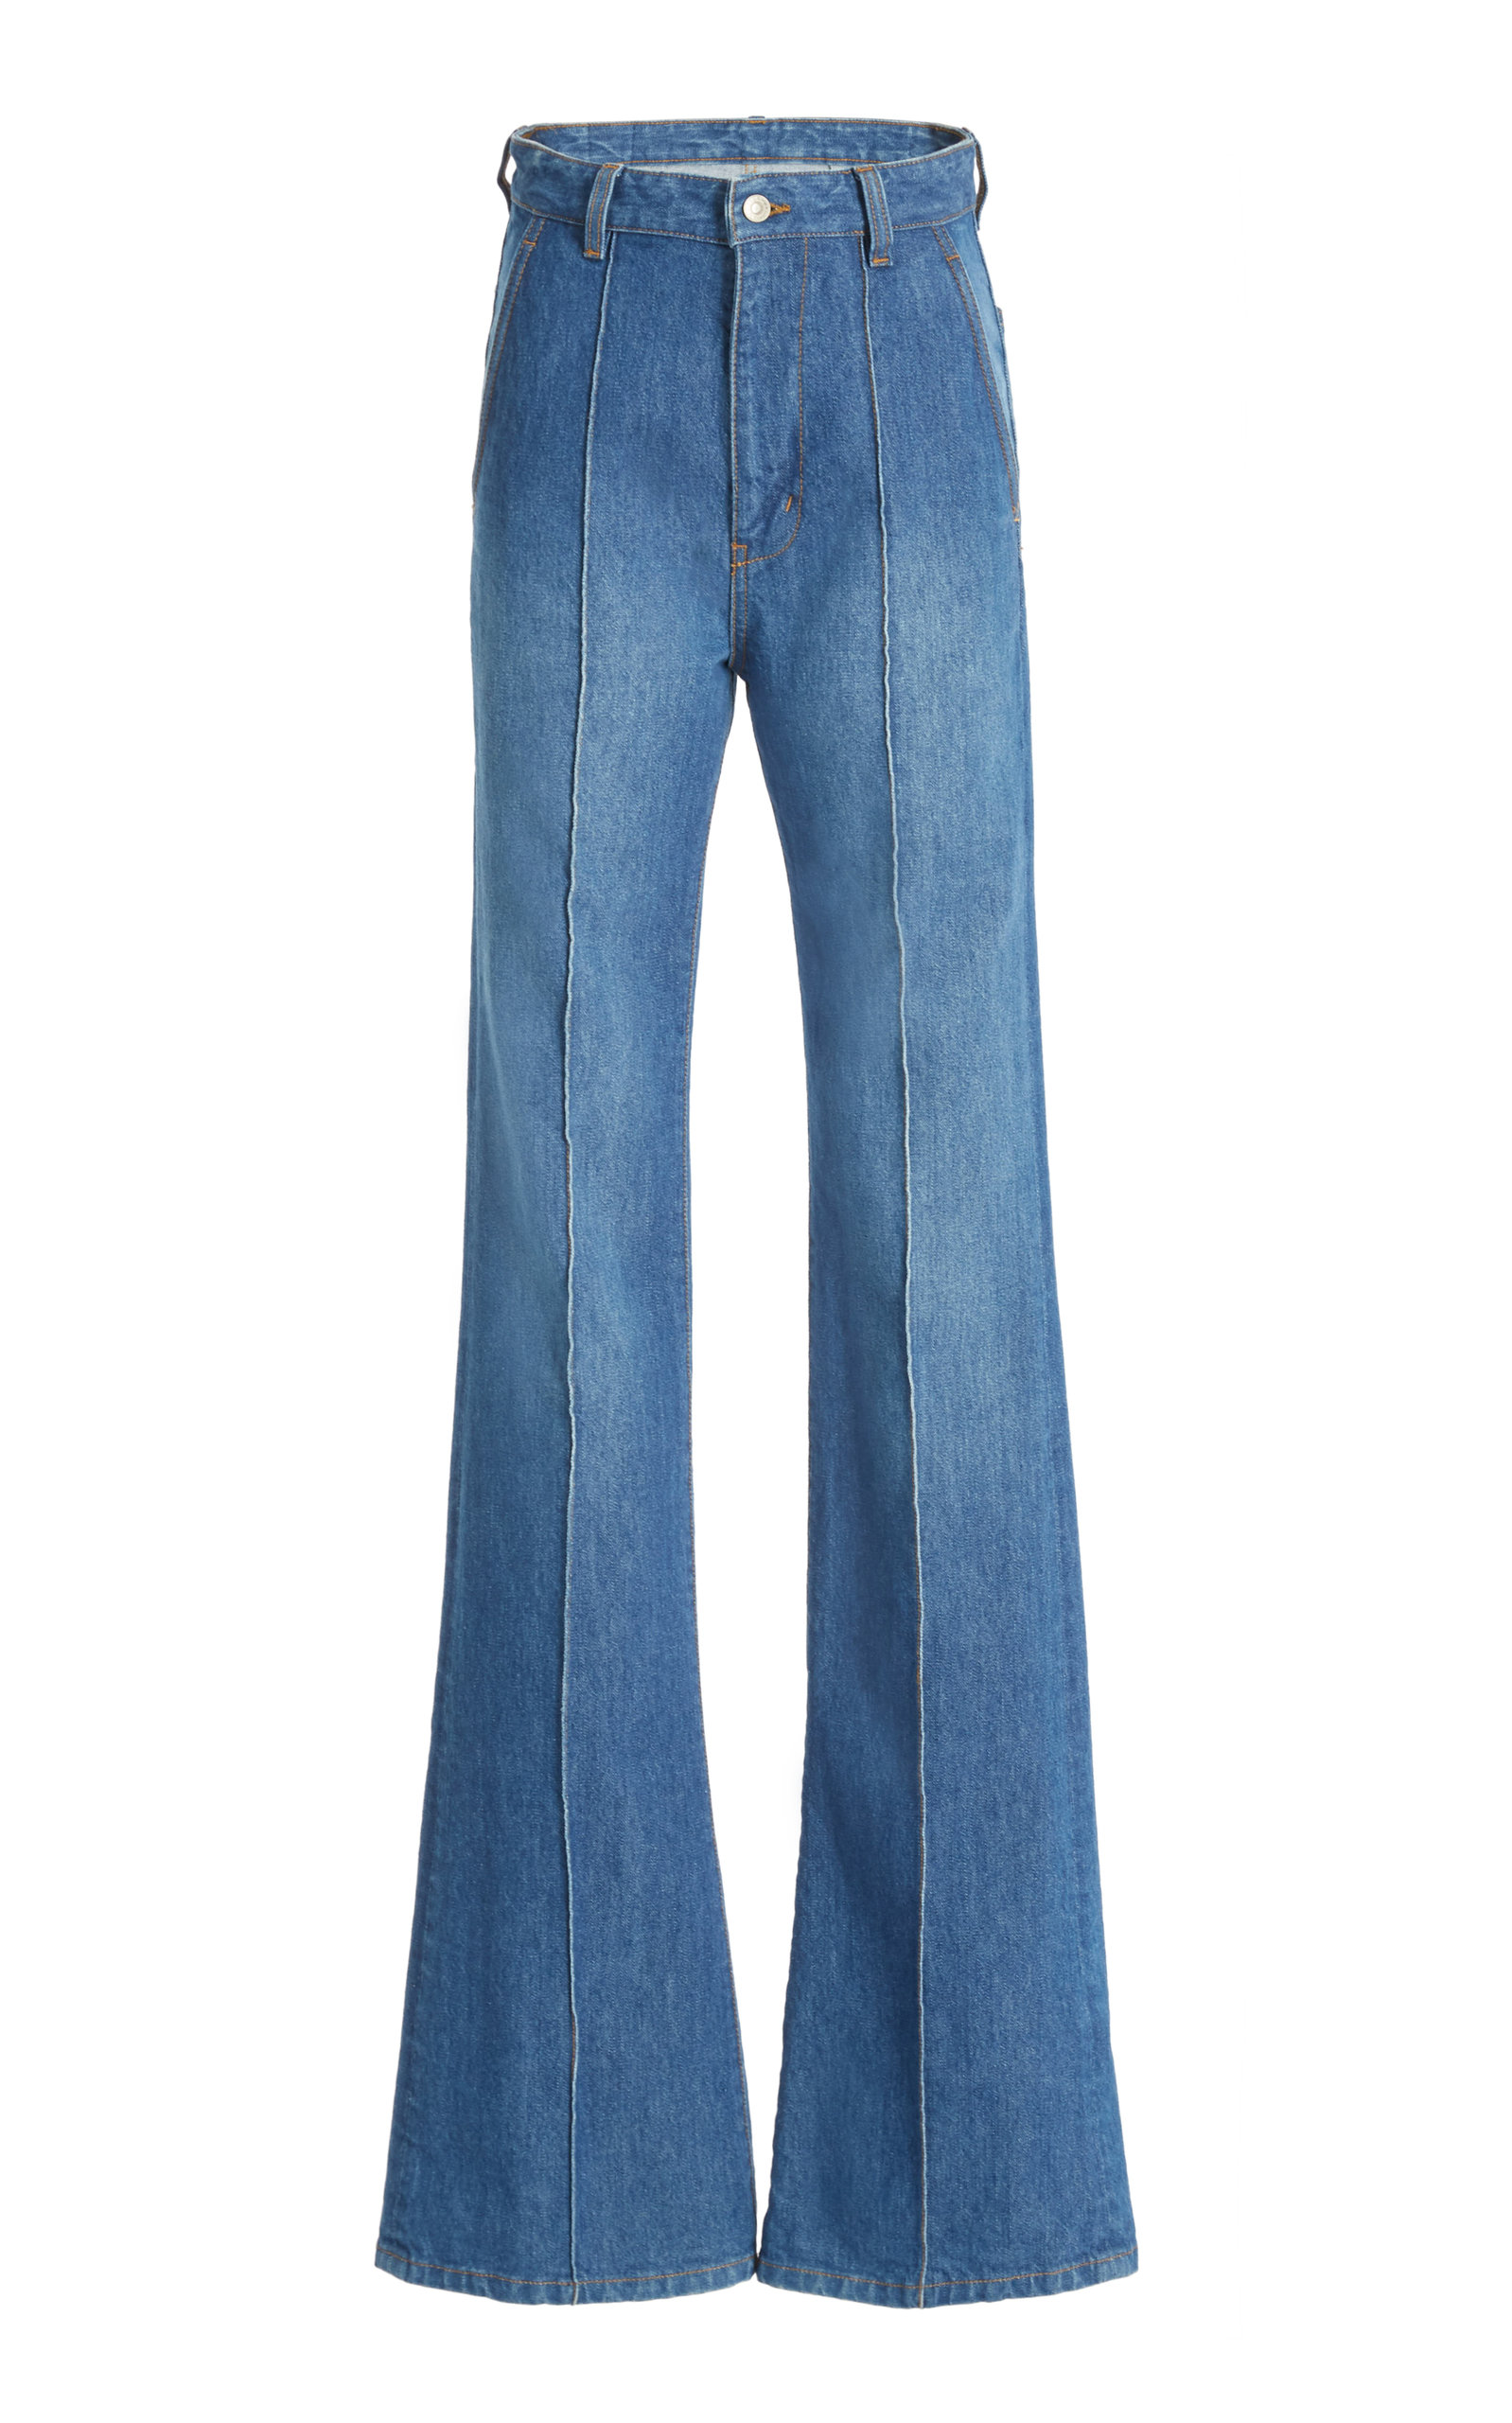 Victoria Beckham - Women's Brigitte Straight-Leg Denim Jeans - Medium Wash - 24 - Moda Operandi